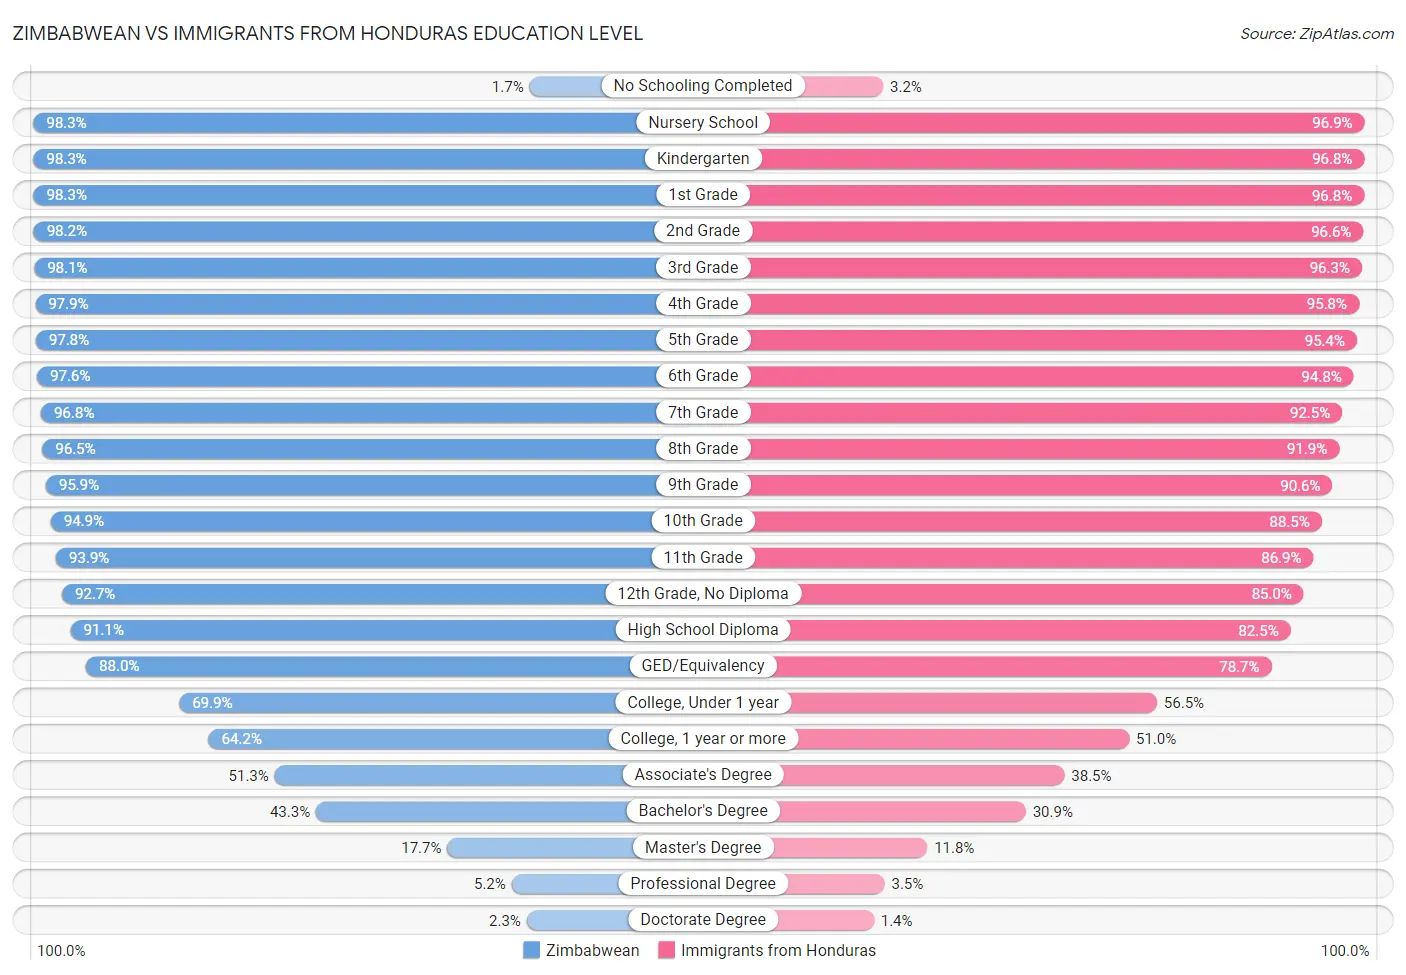 Zimbabwean vs Immigrants from Honduras Education Level